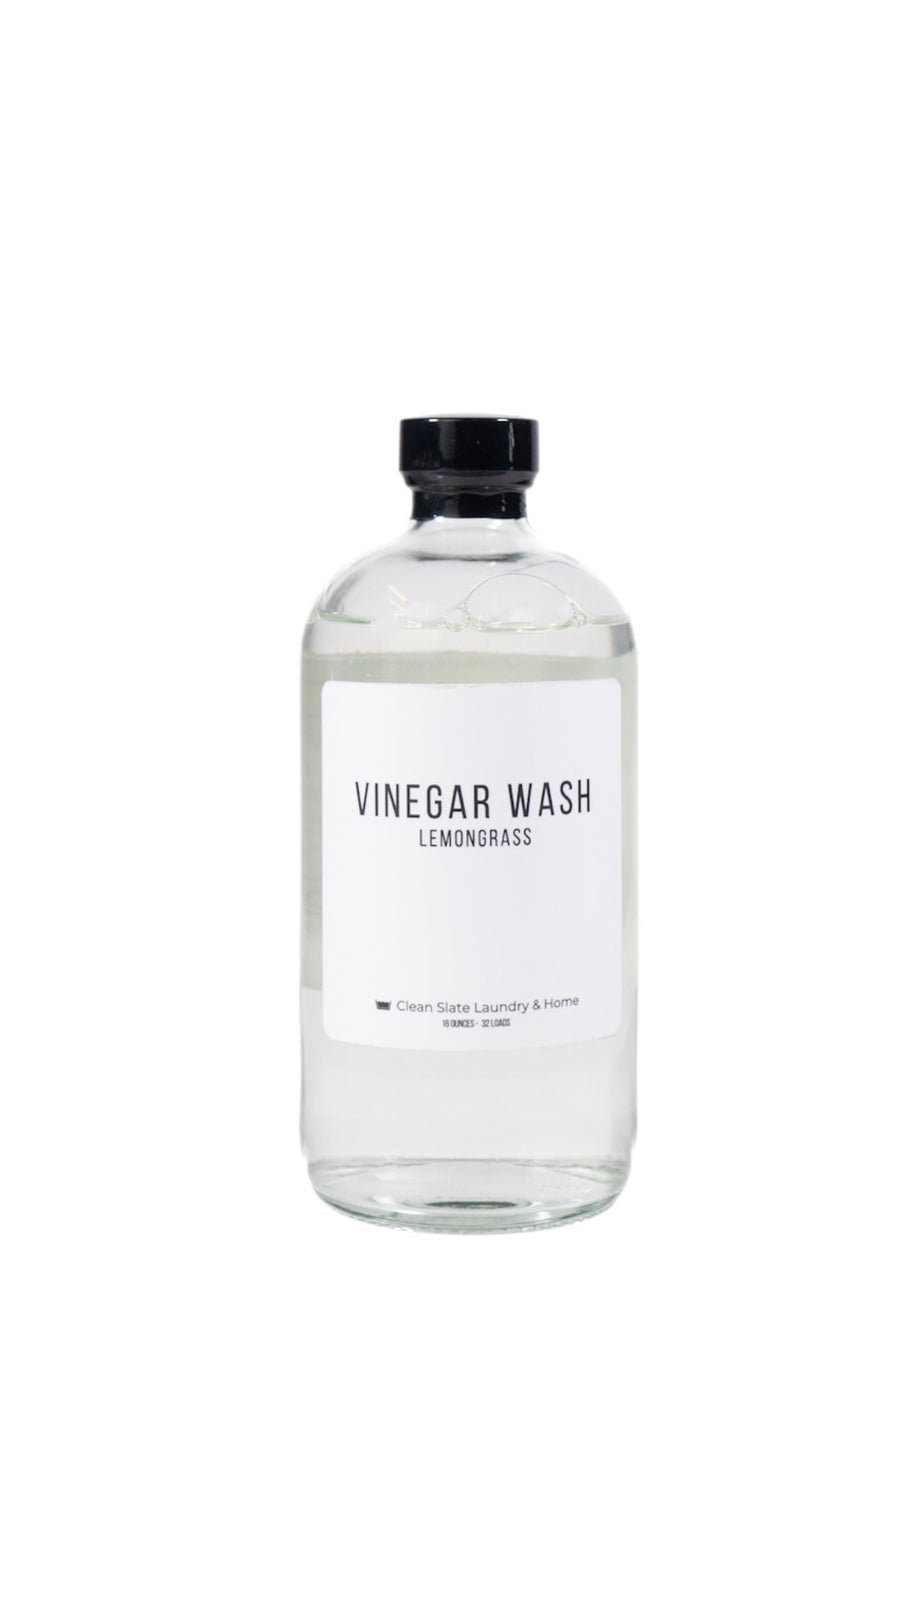 16oz Lemongrass Vinegar Wash by Clean Slate Laundry & Home